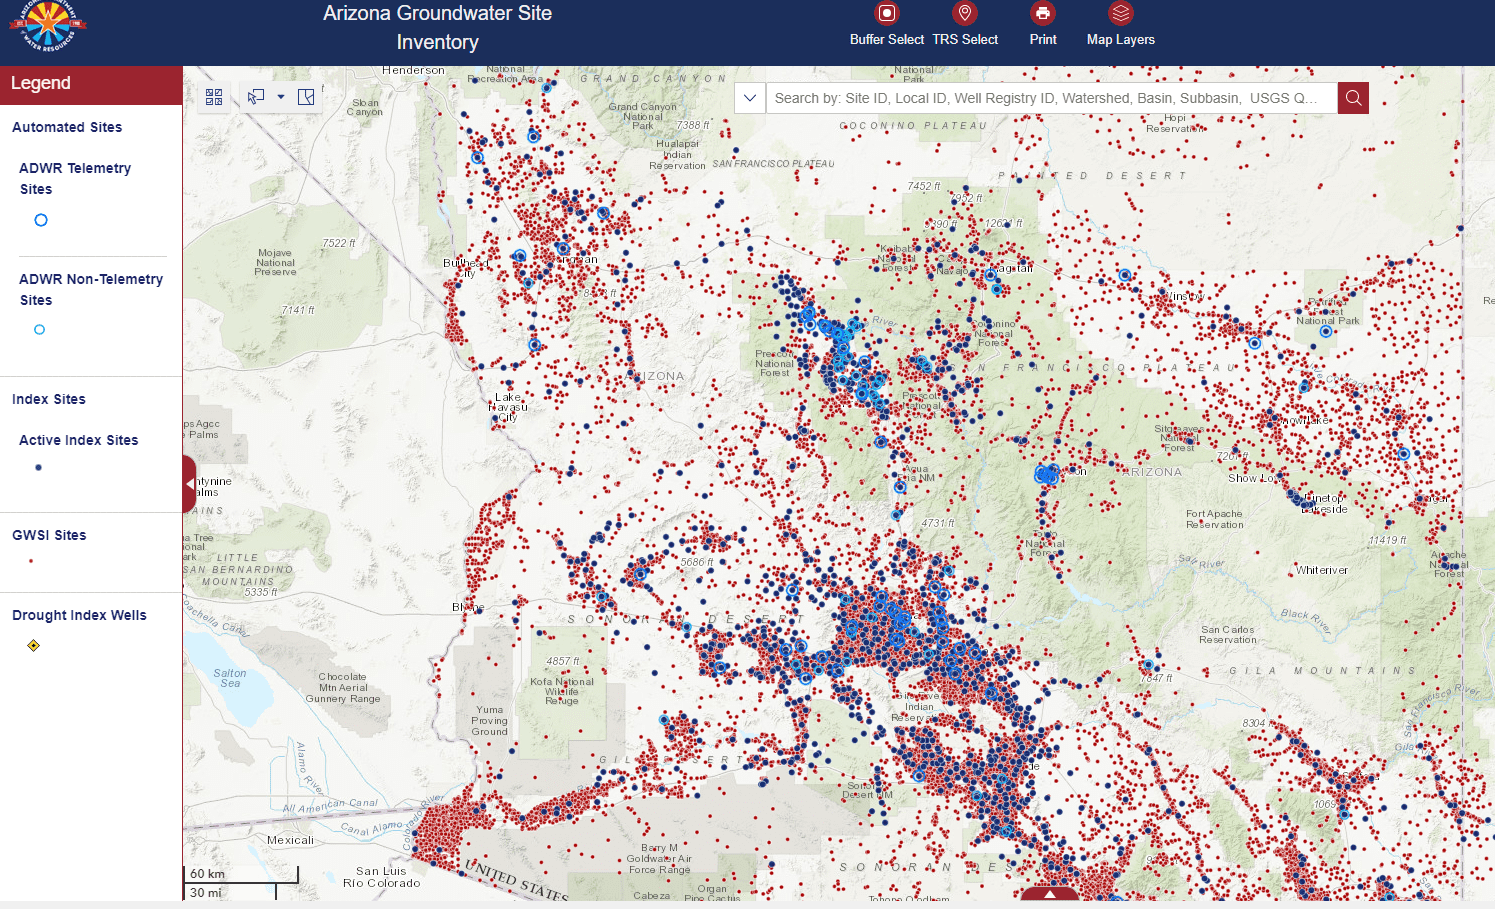 Screenshot of Arizona's groundwater site inventory app